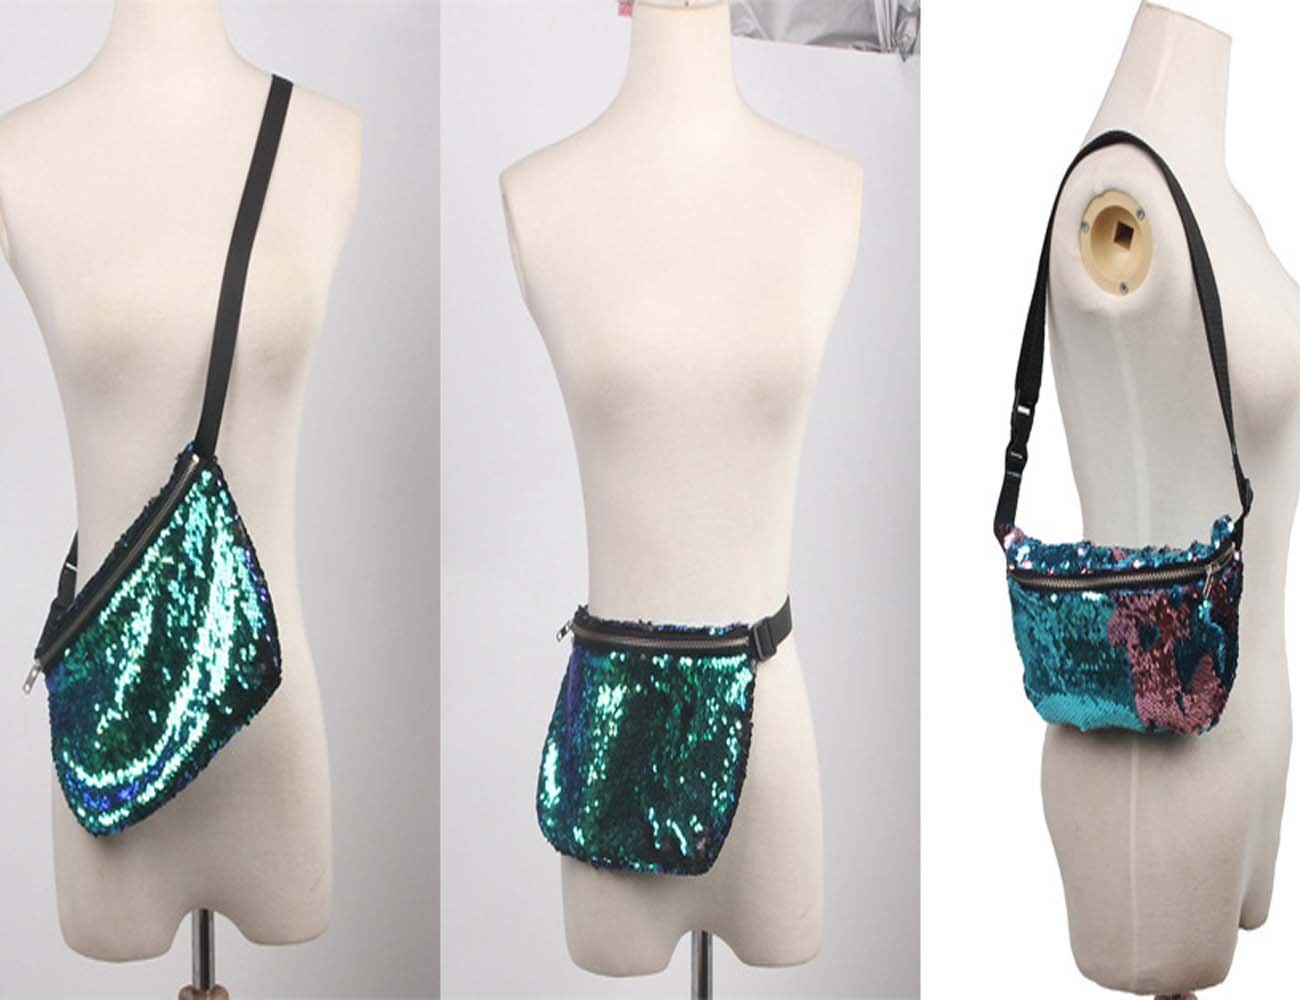 YEKEYI Reversible Mermaid Sparkling Sequins Glitter Belt Waist Bag Handbag Wallet Purse Case Cosmetic Makeup Bag Waist